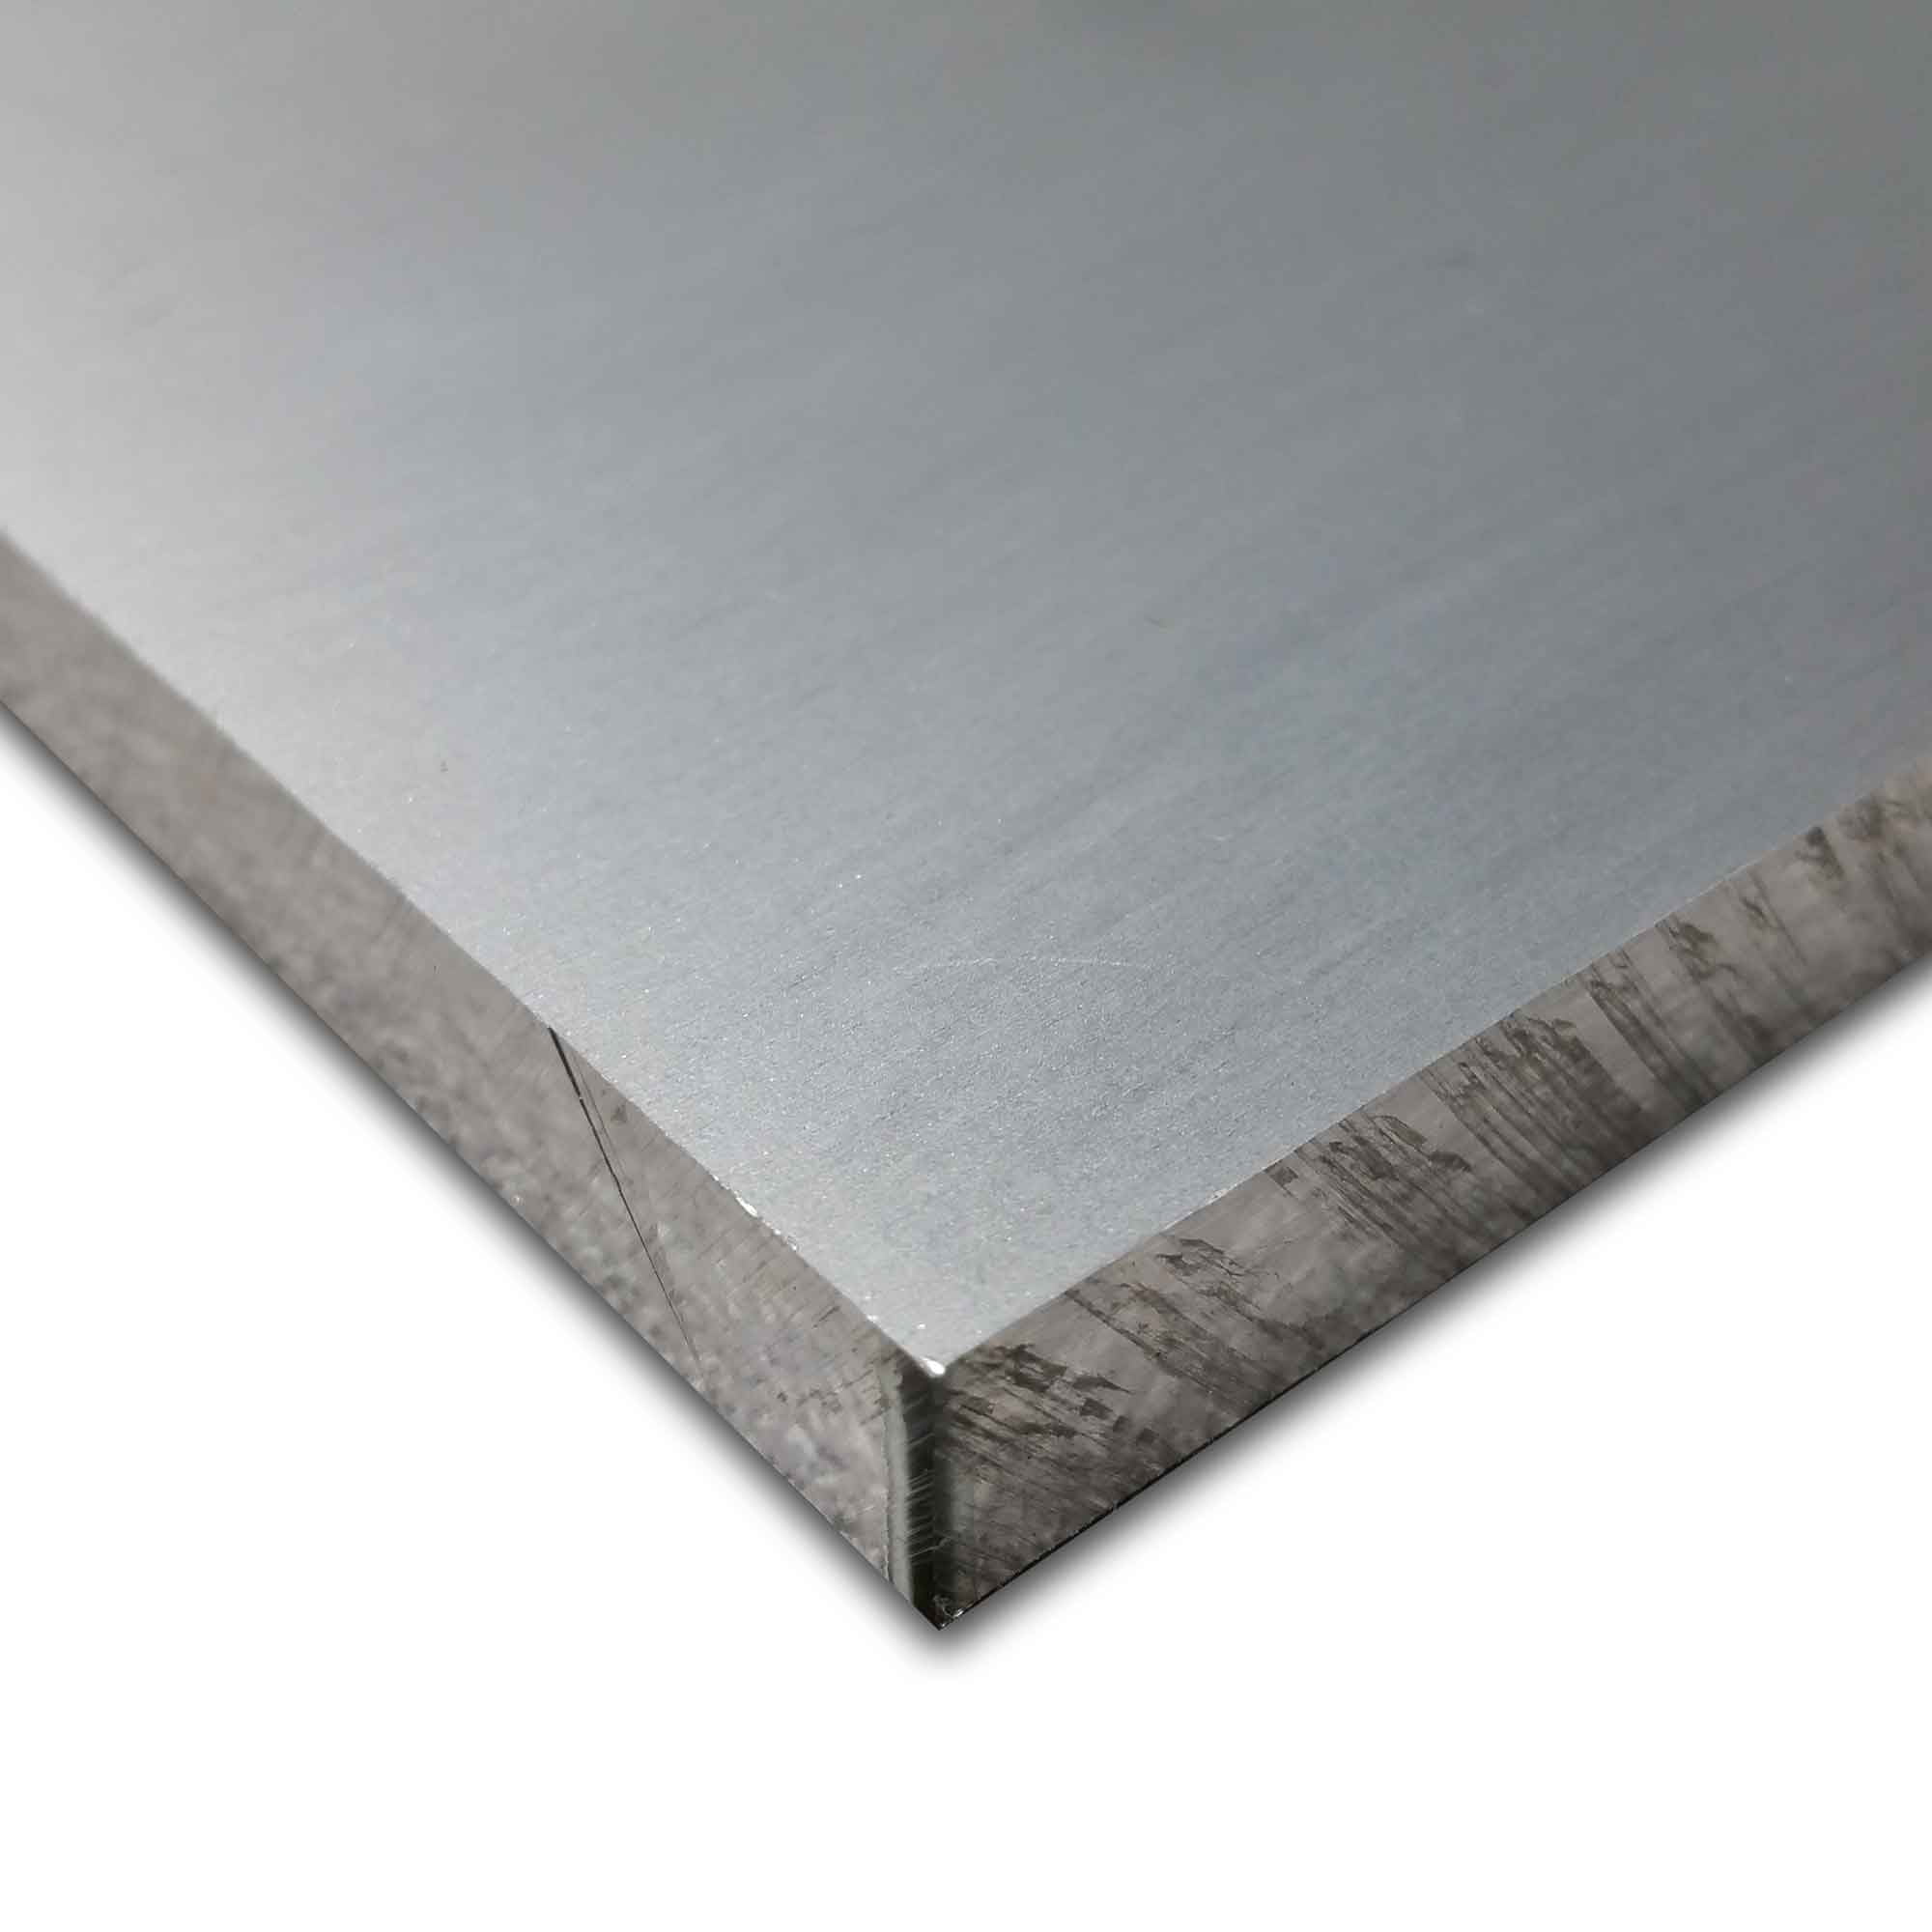 3/8" x 36" x 48" Alloy 5052 Aluminum Plate 